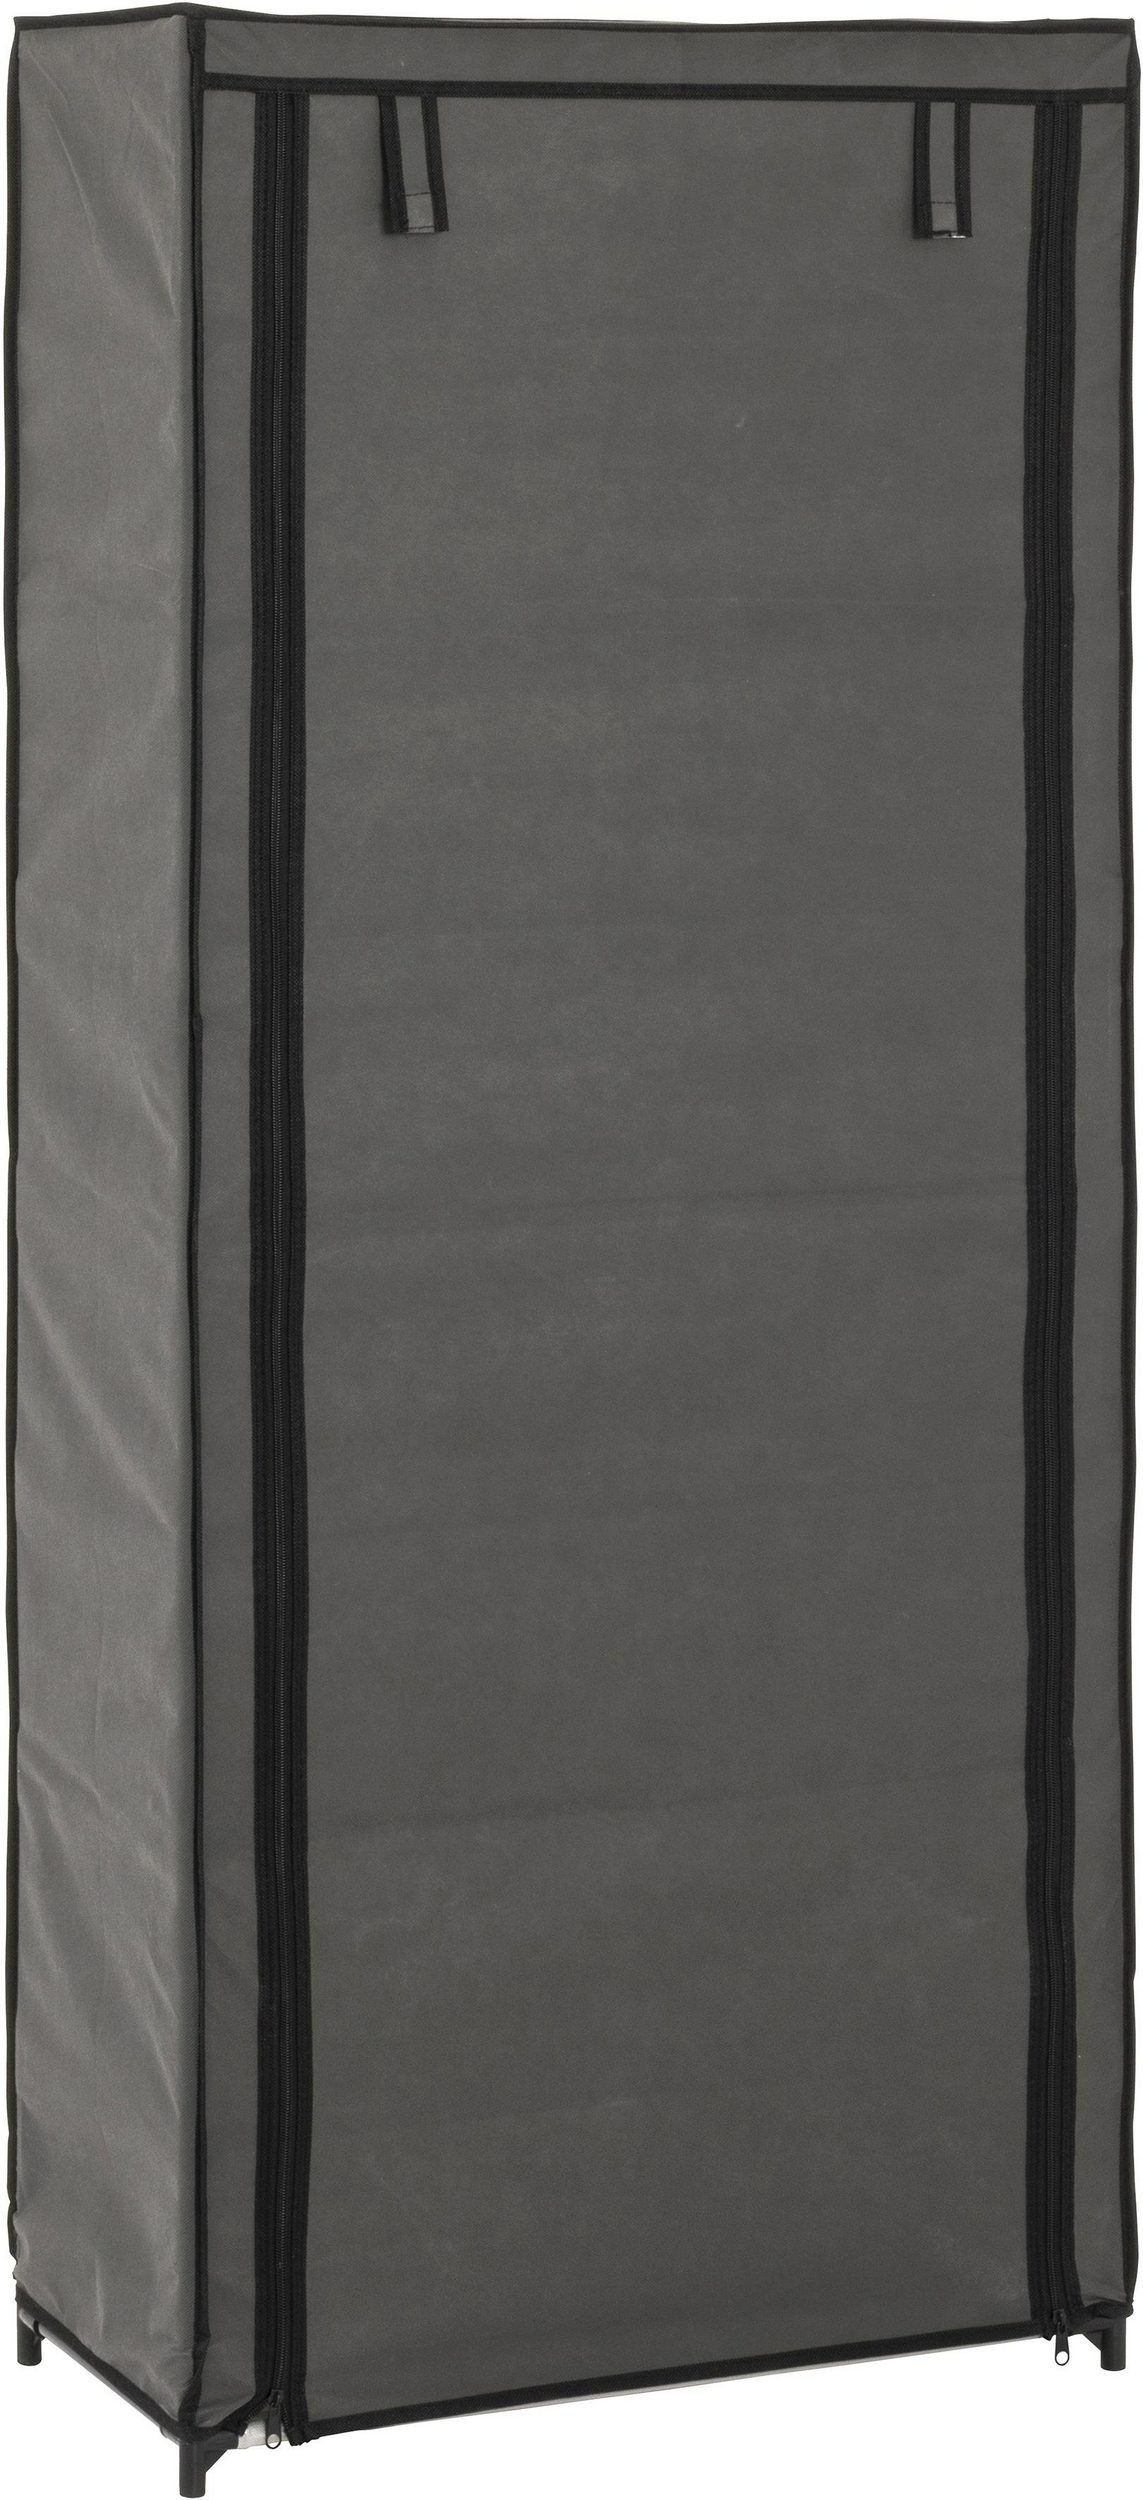 HAKU Kleiderschrank HAKU Möbel Stoffschrank - grau-schwarz - H. 142cm x B. 60cm